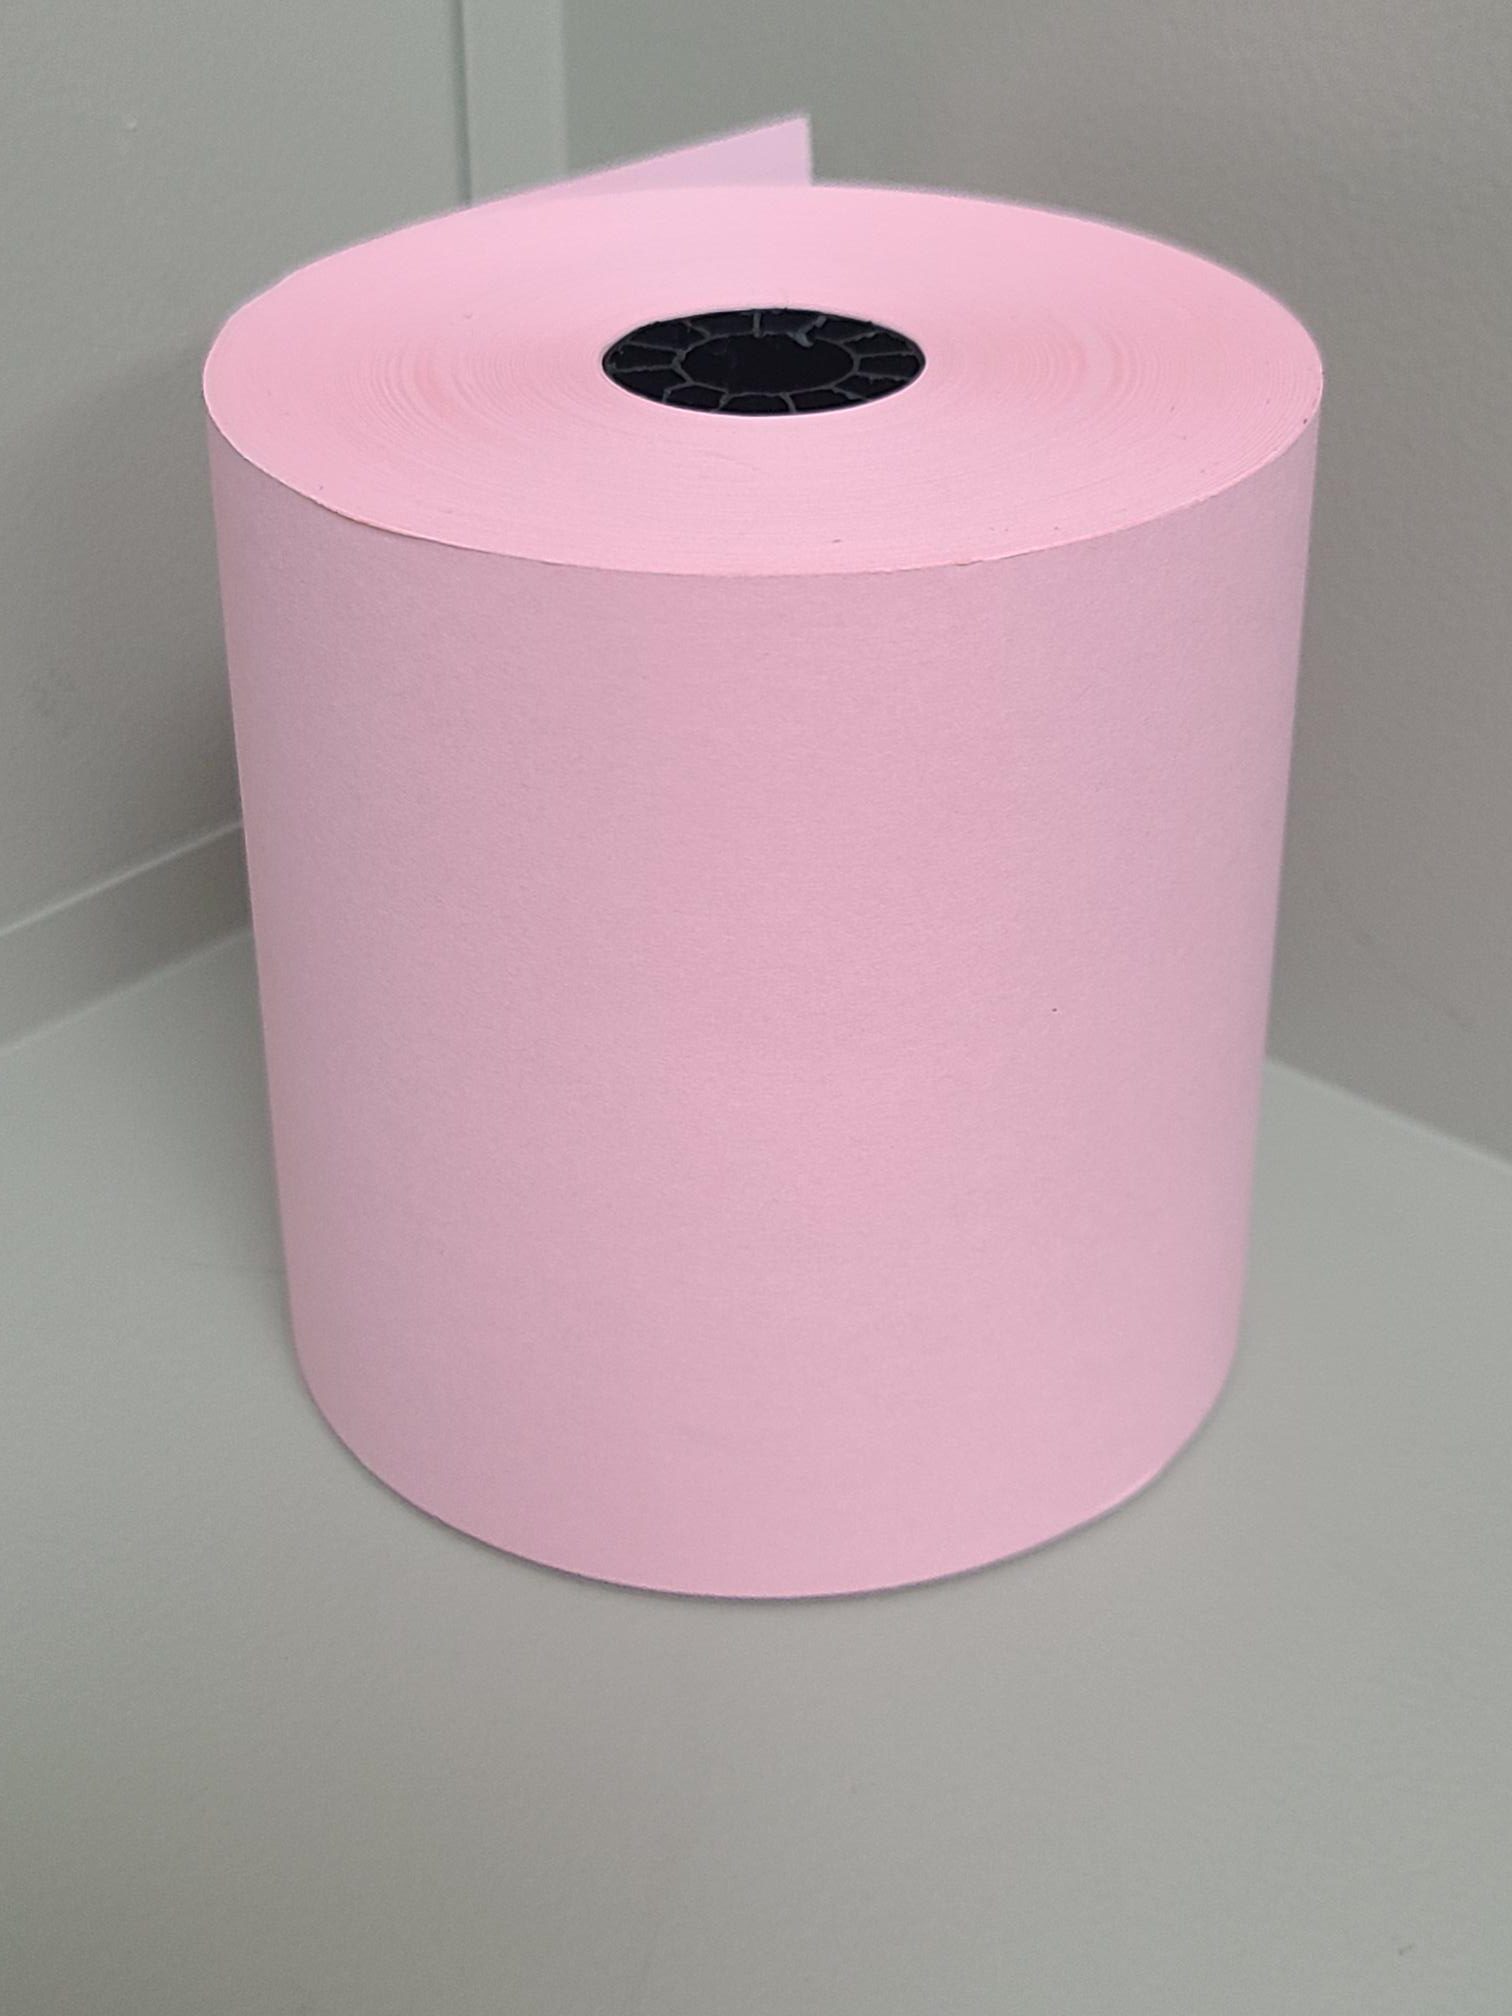 Kitchen Printer Paper (Pink Bond Paper)